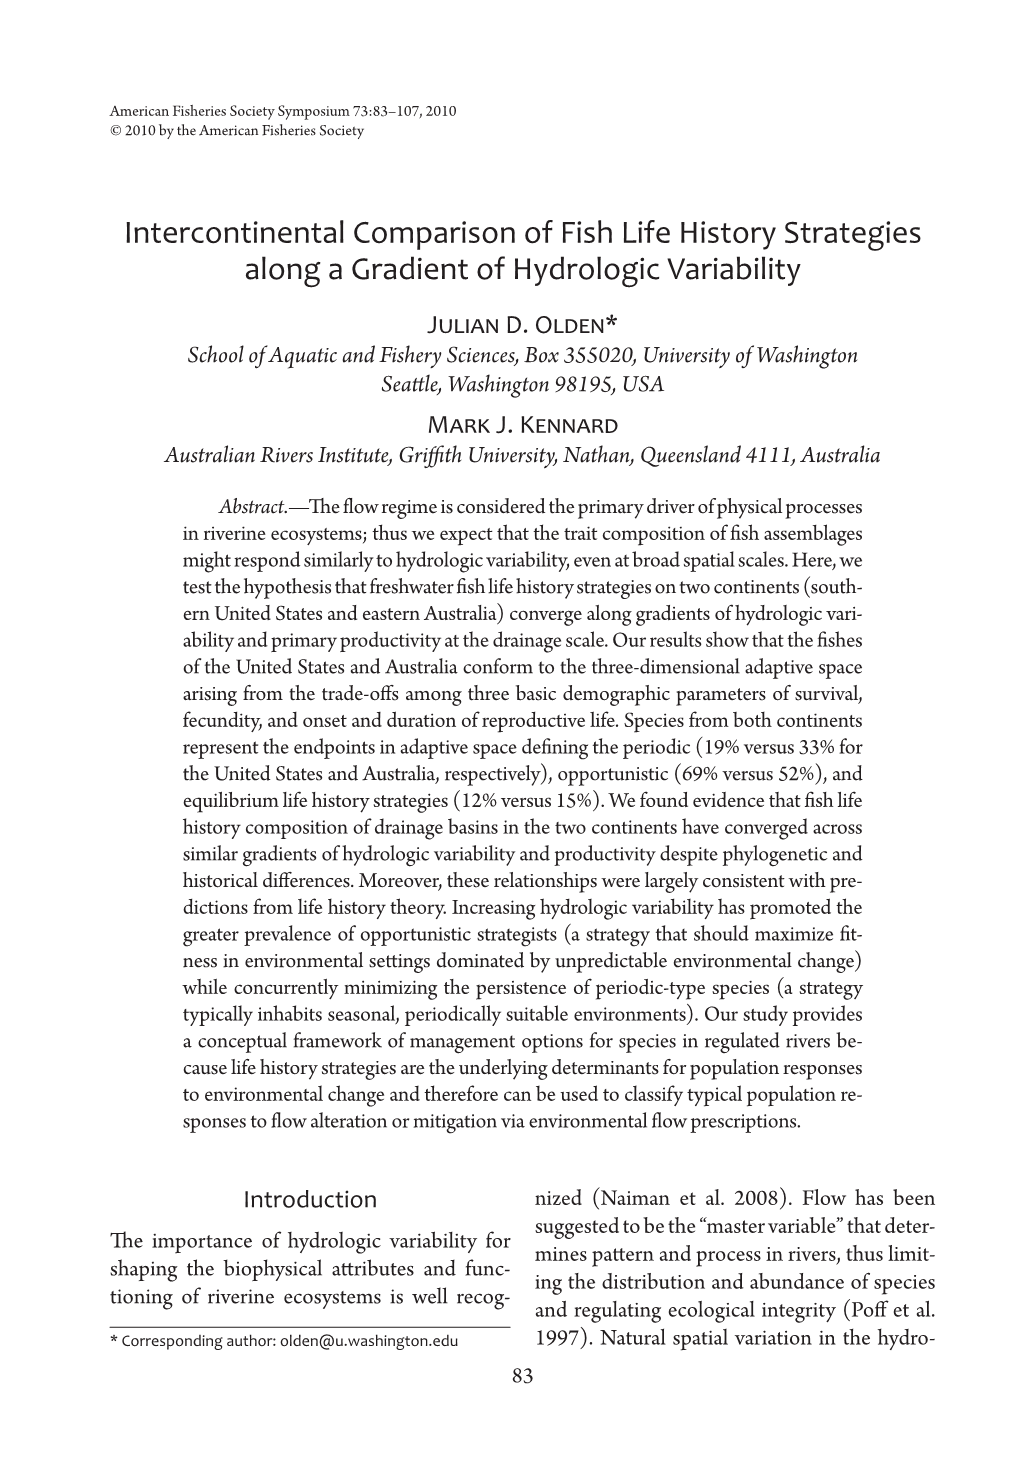 Intercontinental Comparison of Fish Life History Strategies Along a Gradient of Hydrologic Variability Julian D